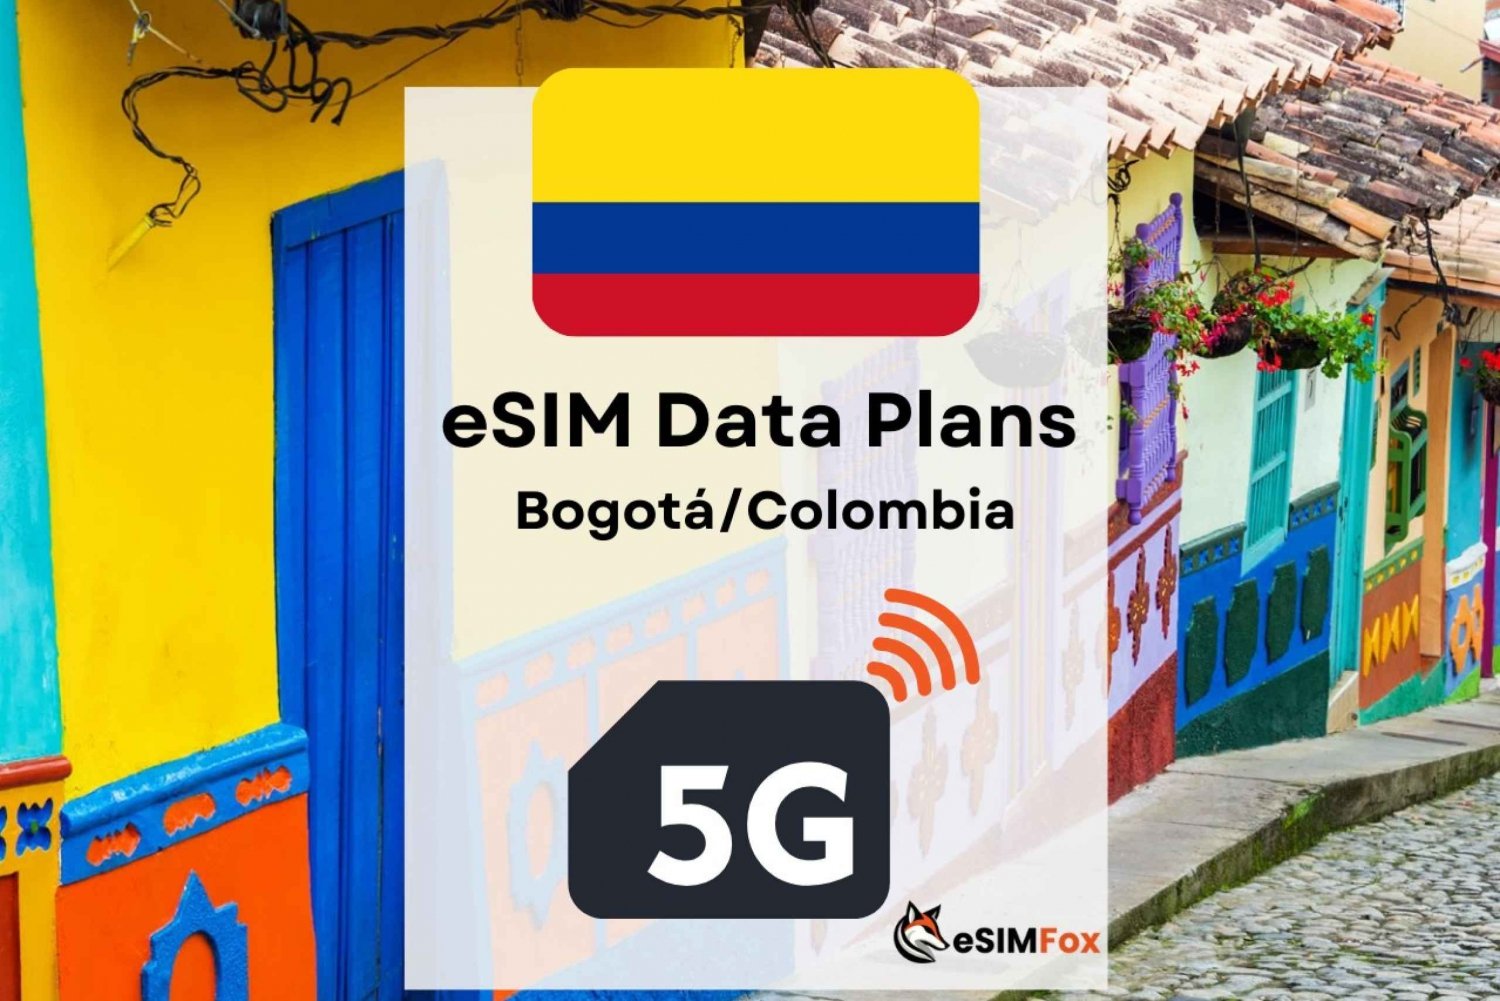 Bogotá: eSIM Internet Data Plan for Colombia high-speed